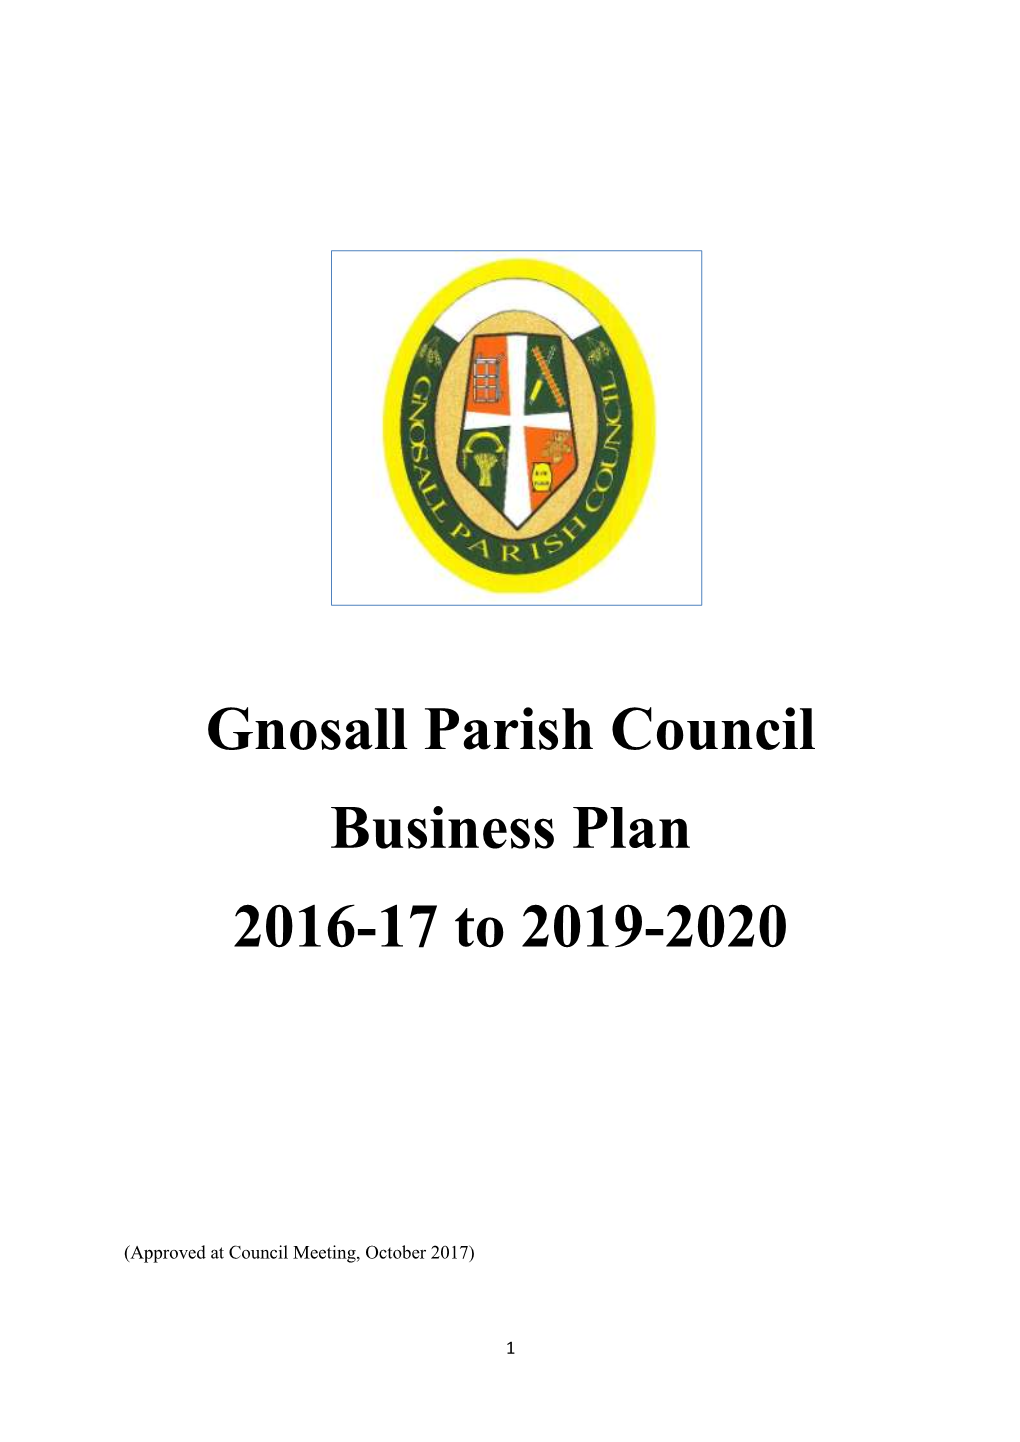 Gnosall Parish Council Business Plan 2016-17 to 2019-2020